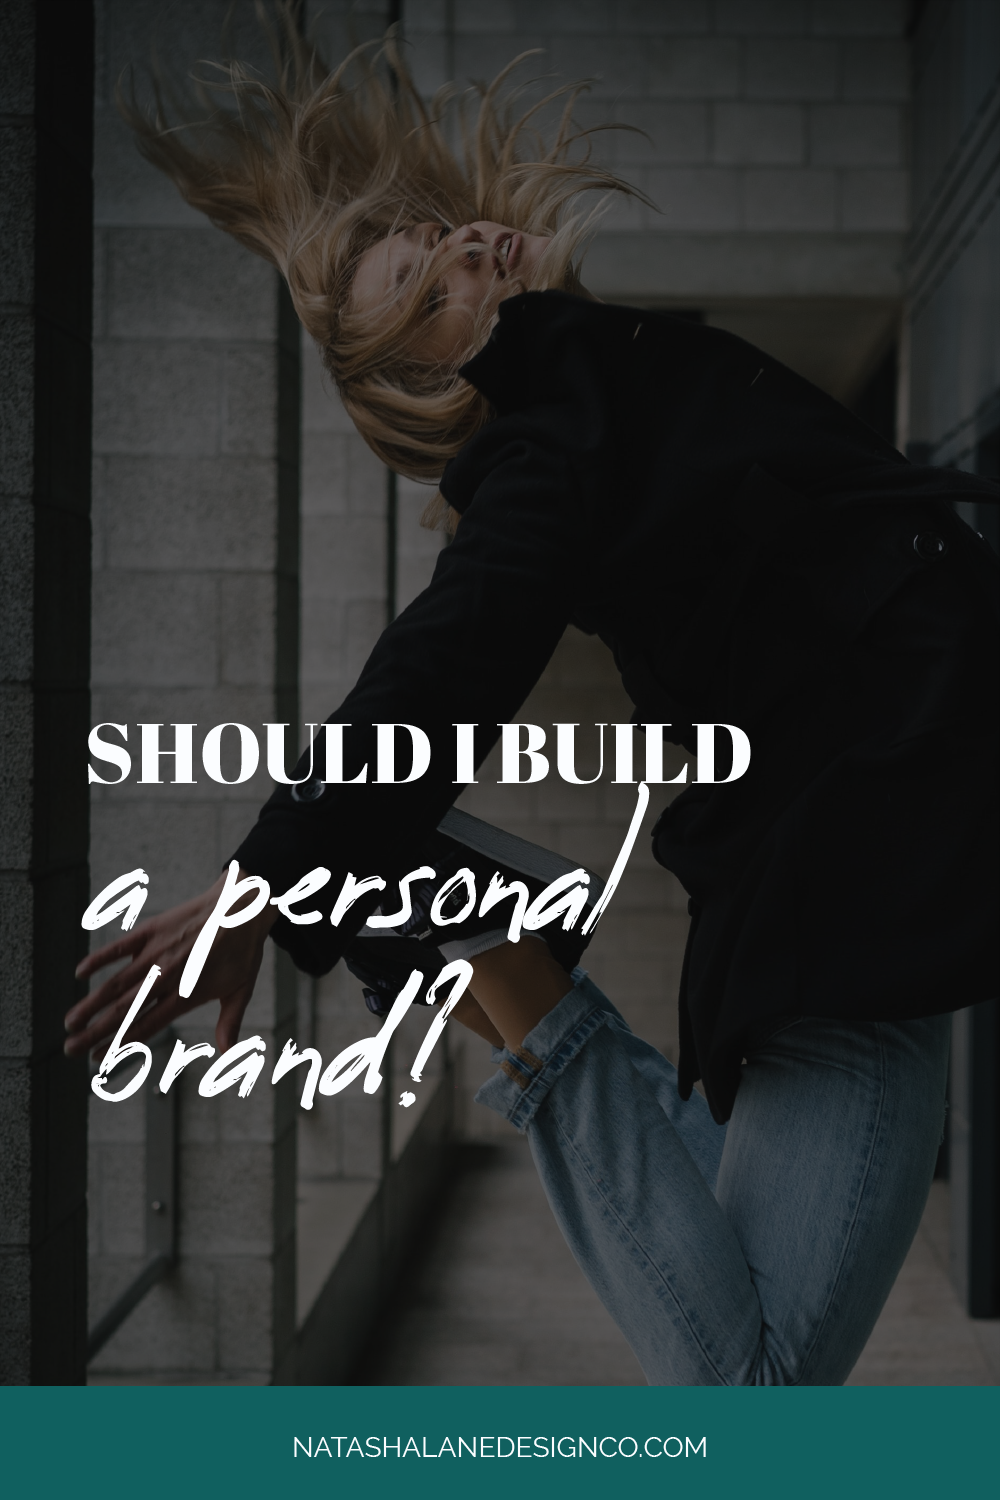 Should I build a personal brand?